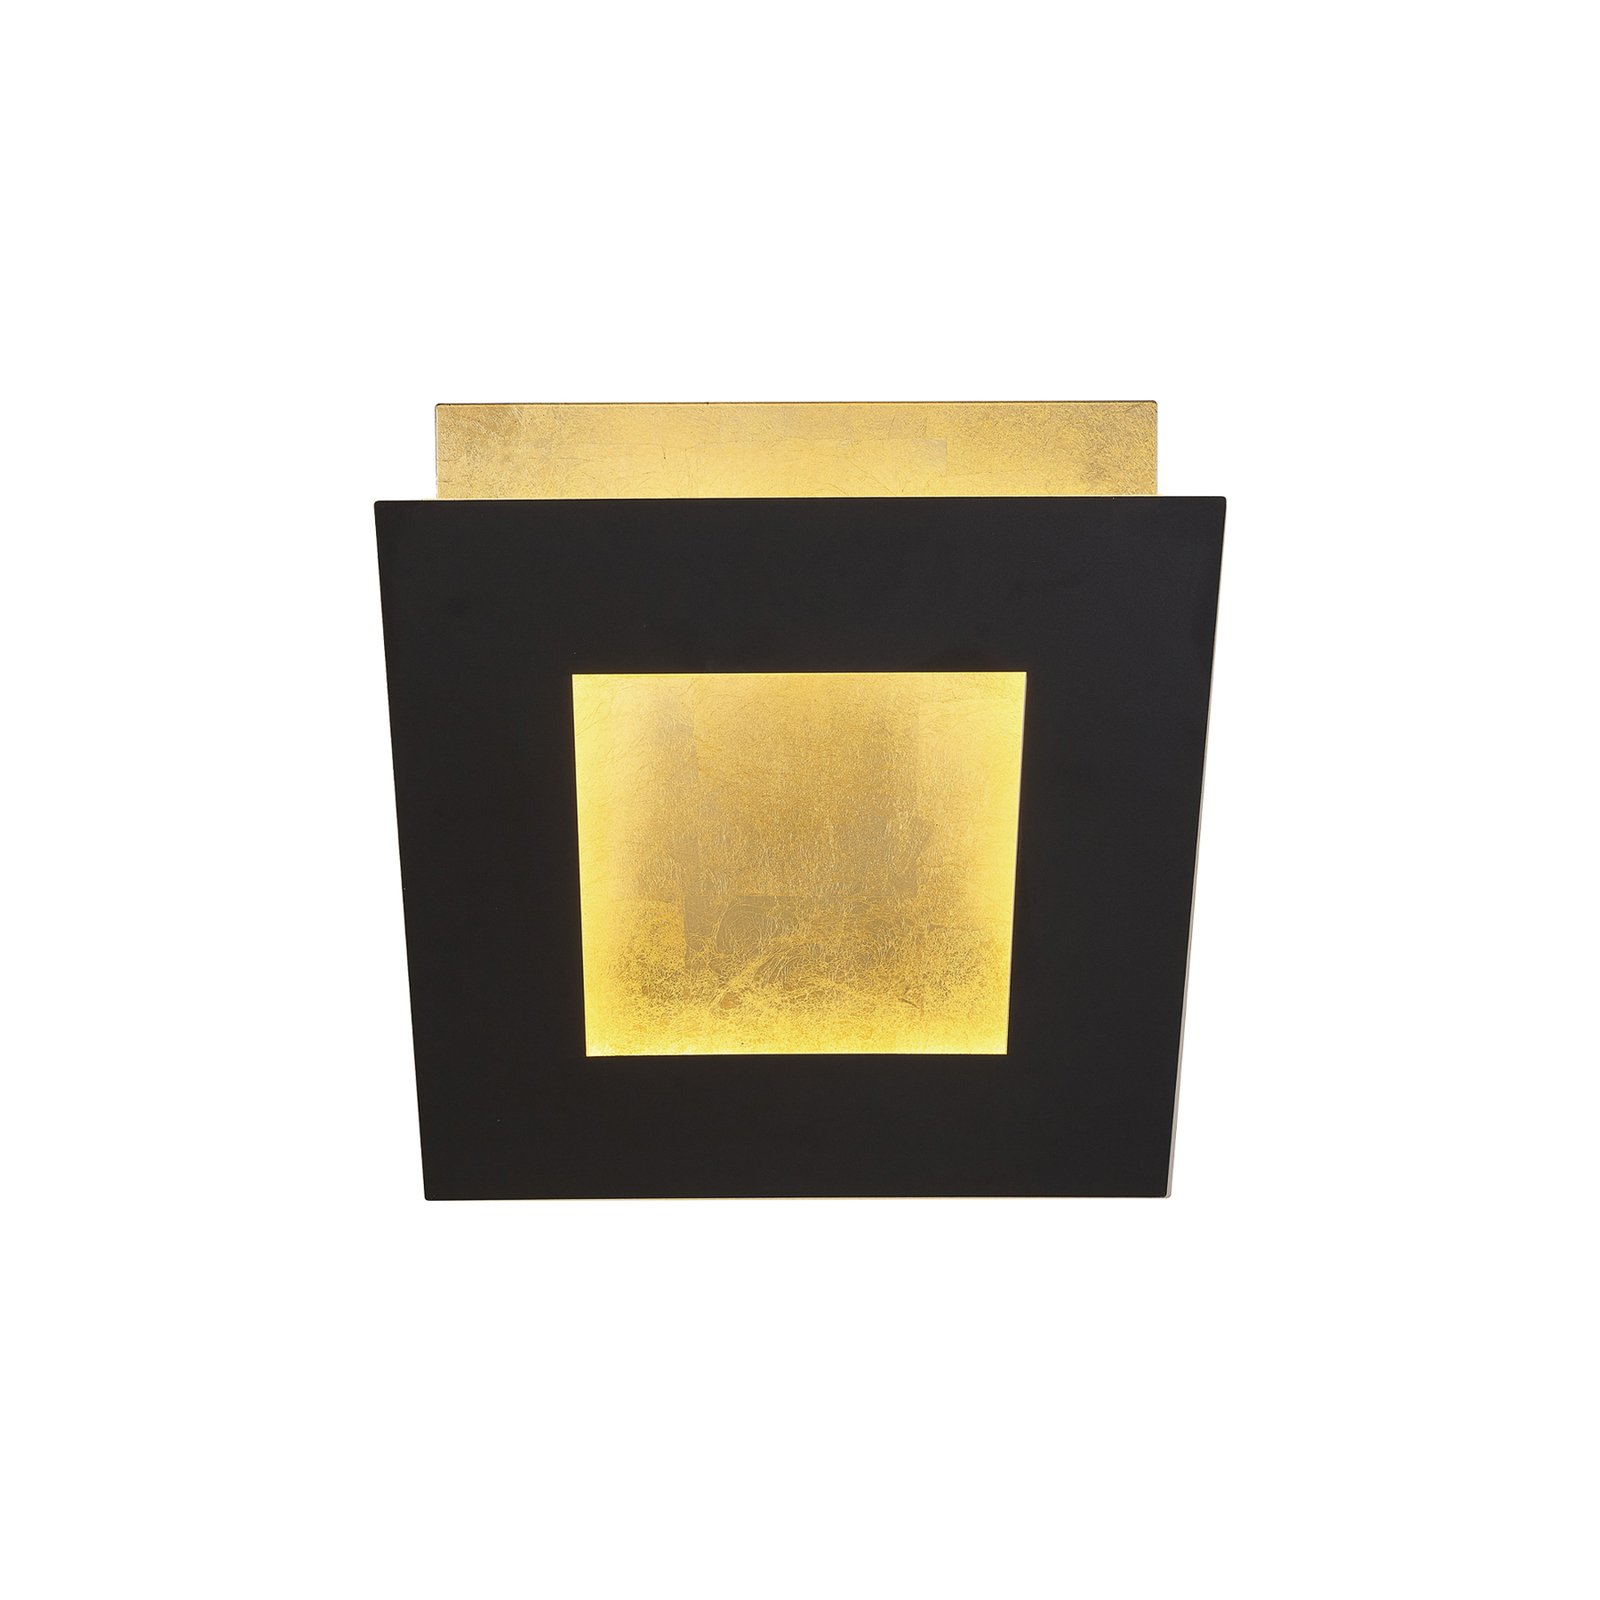 LED wandlamp Dalia, zwart/goud, 22 x 22 cm, aluminium